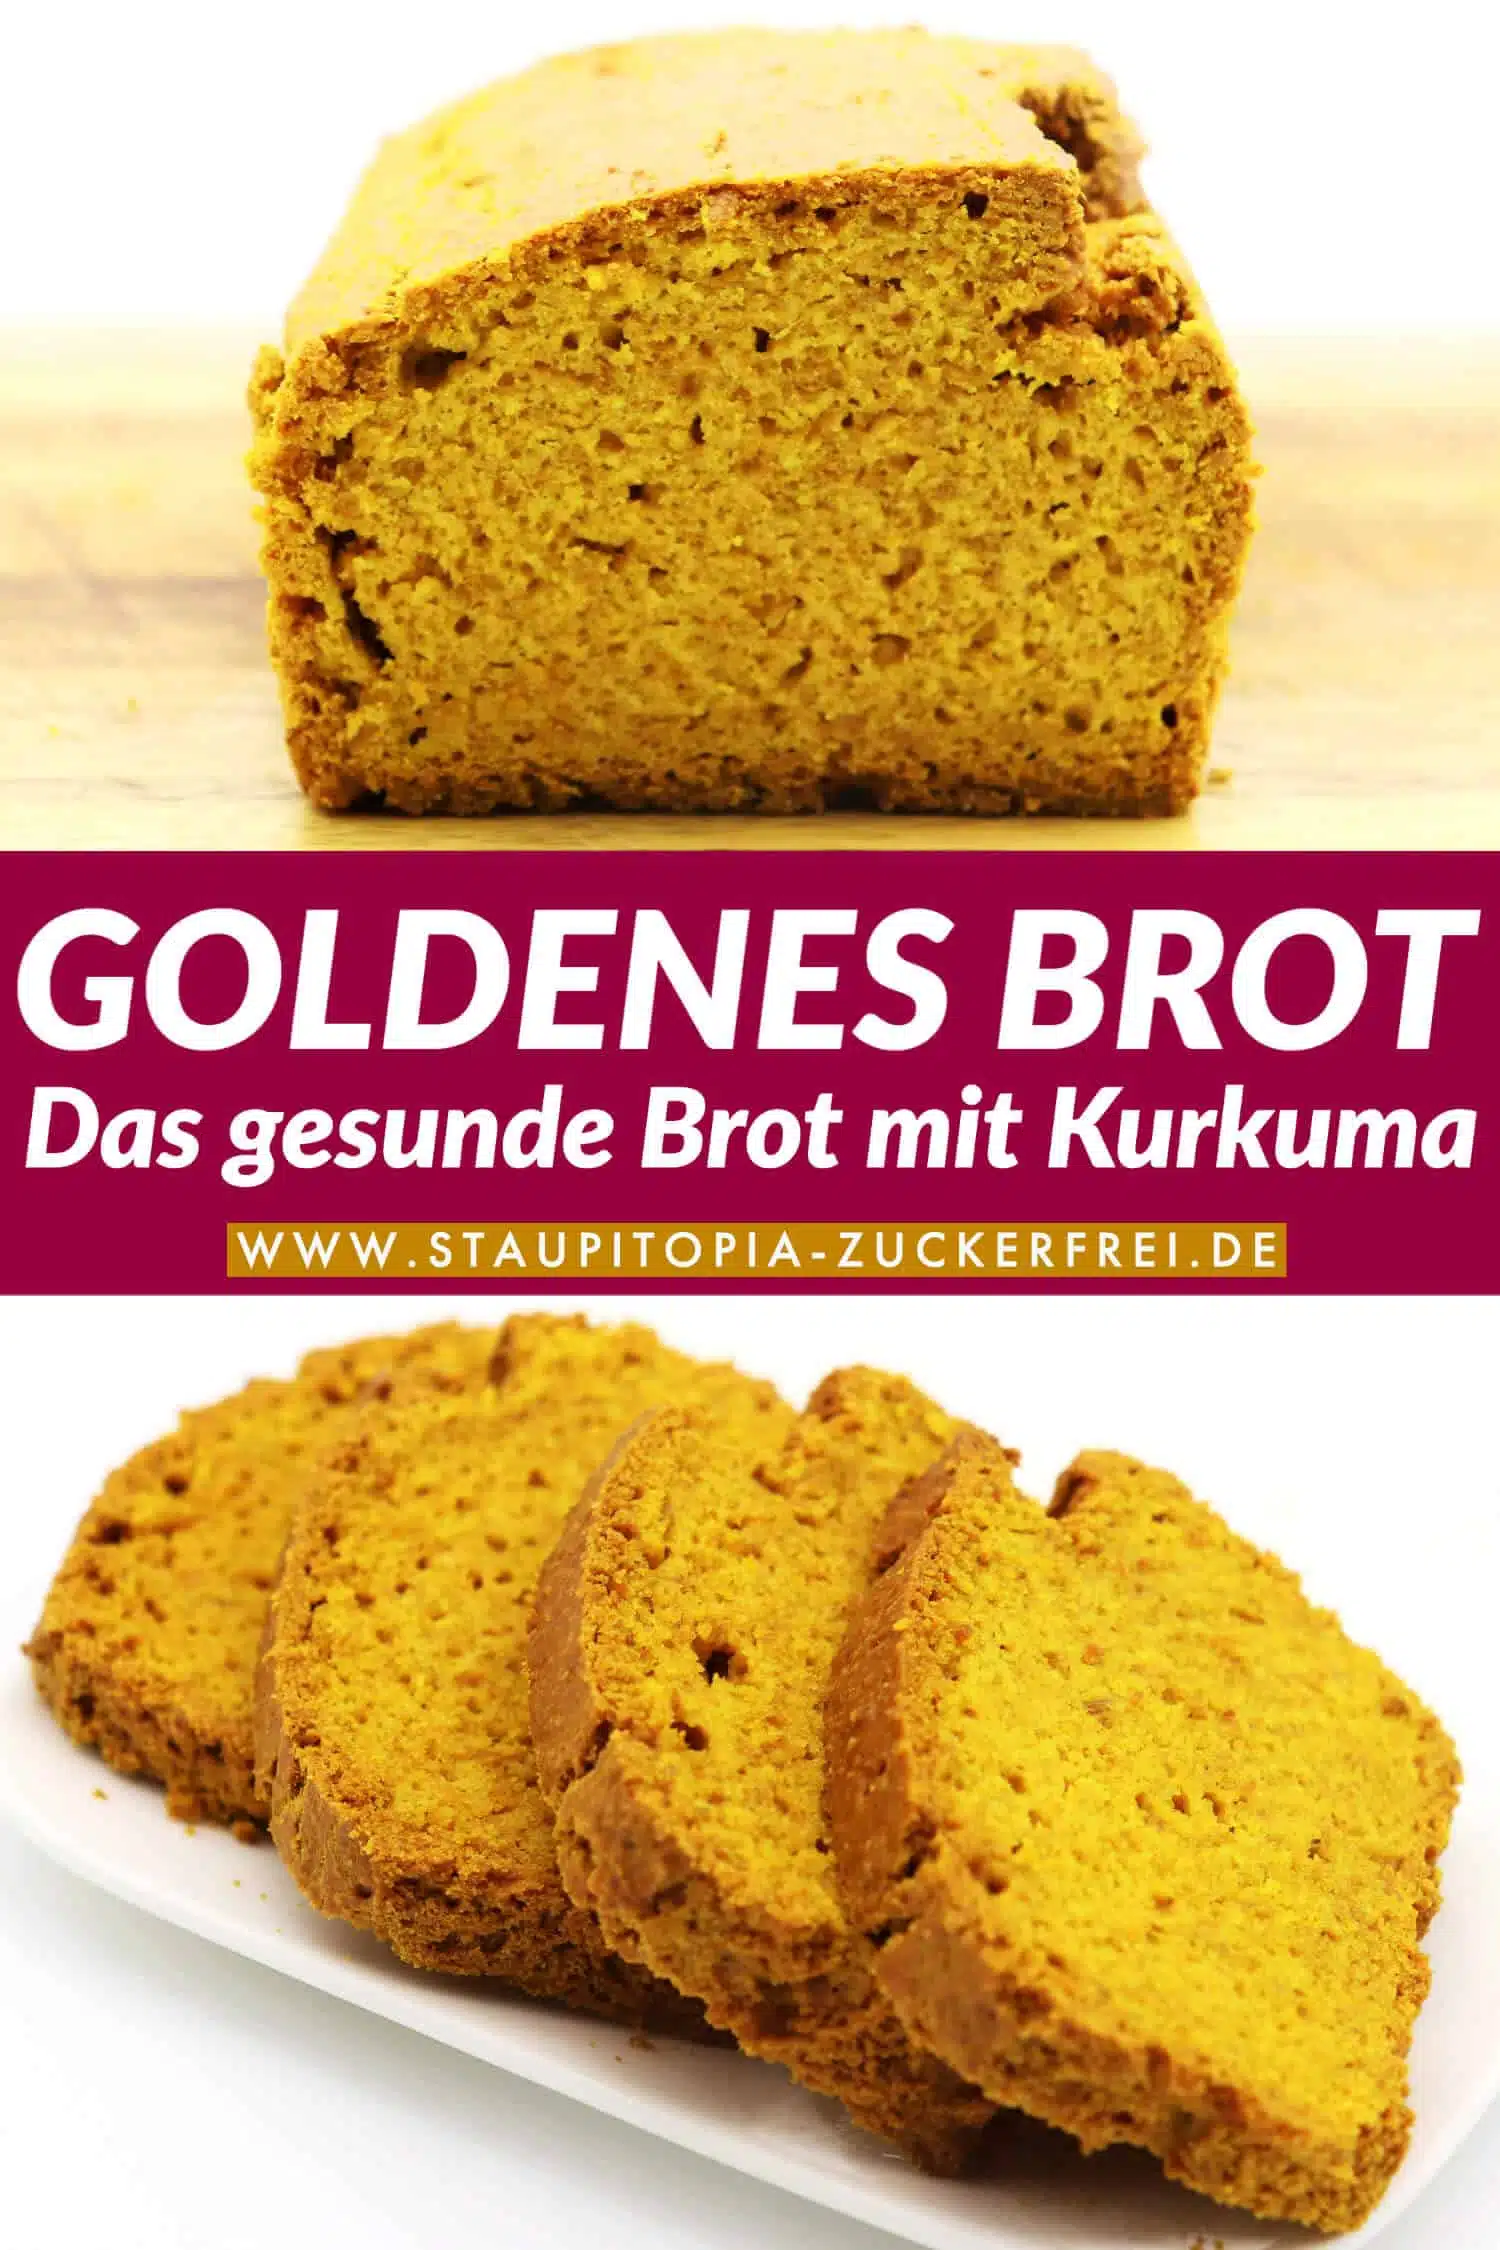 Goldenes Brot: Das gesunde Brot ohne Kohlenhydrate mit Kurkuma